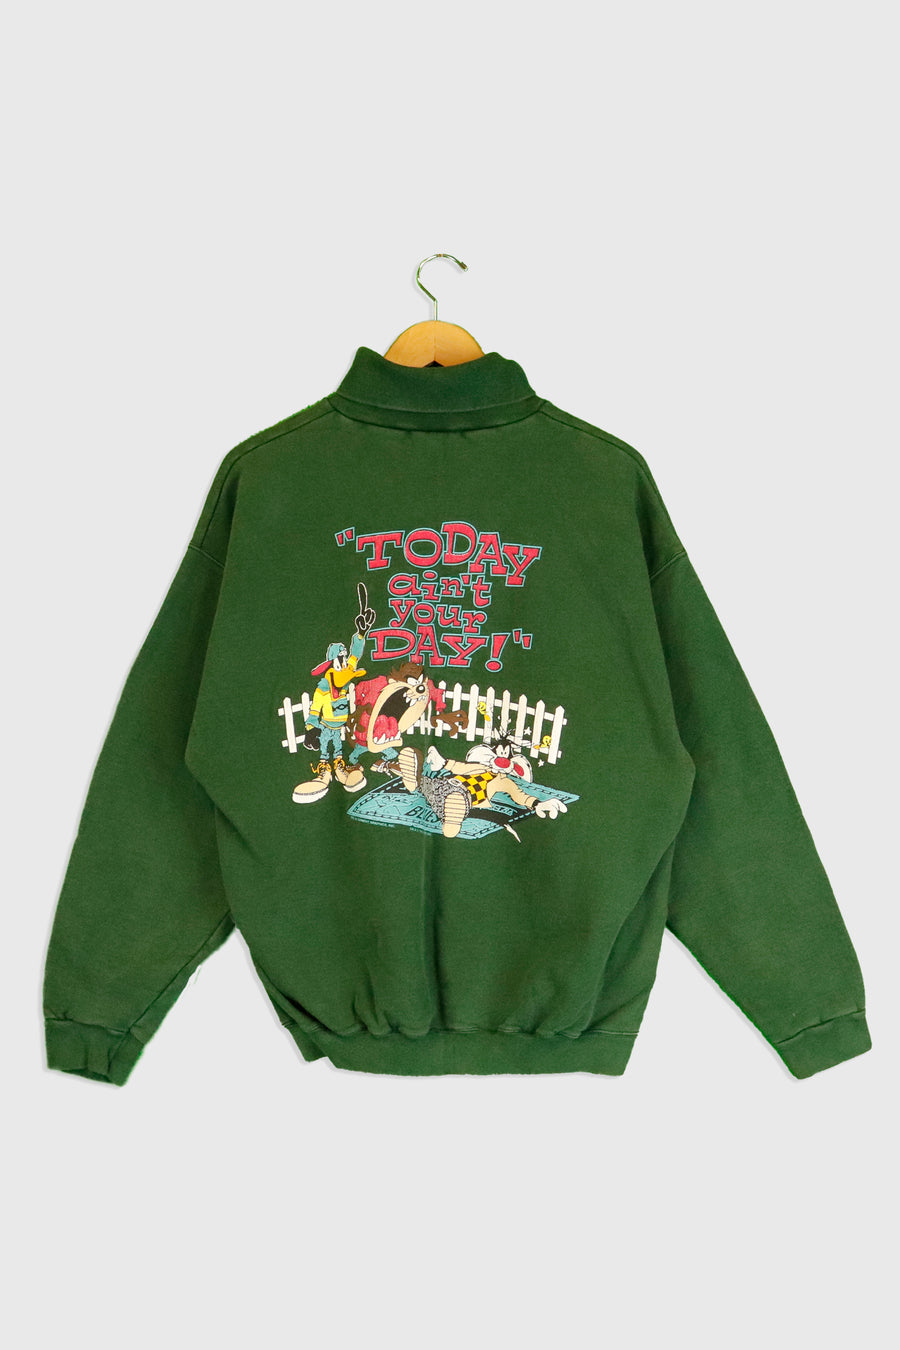 Vintage 1996 Tweety On The Fence Turtleneck Sweatshirt Sz L